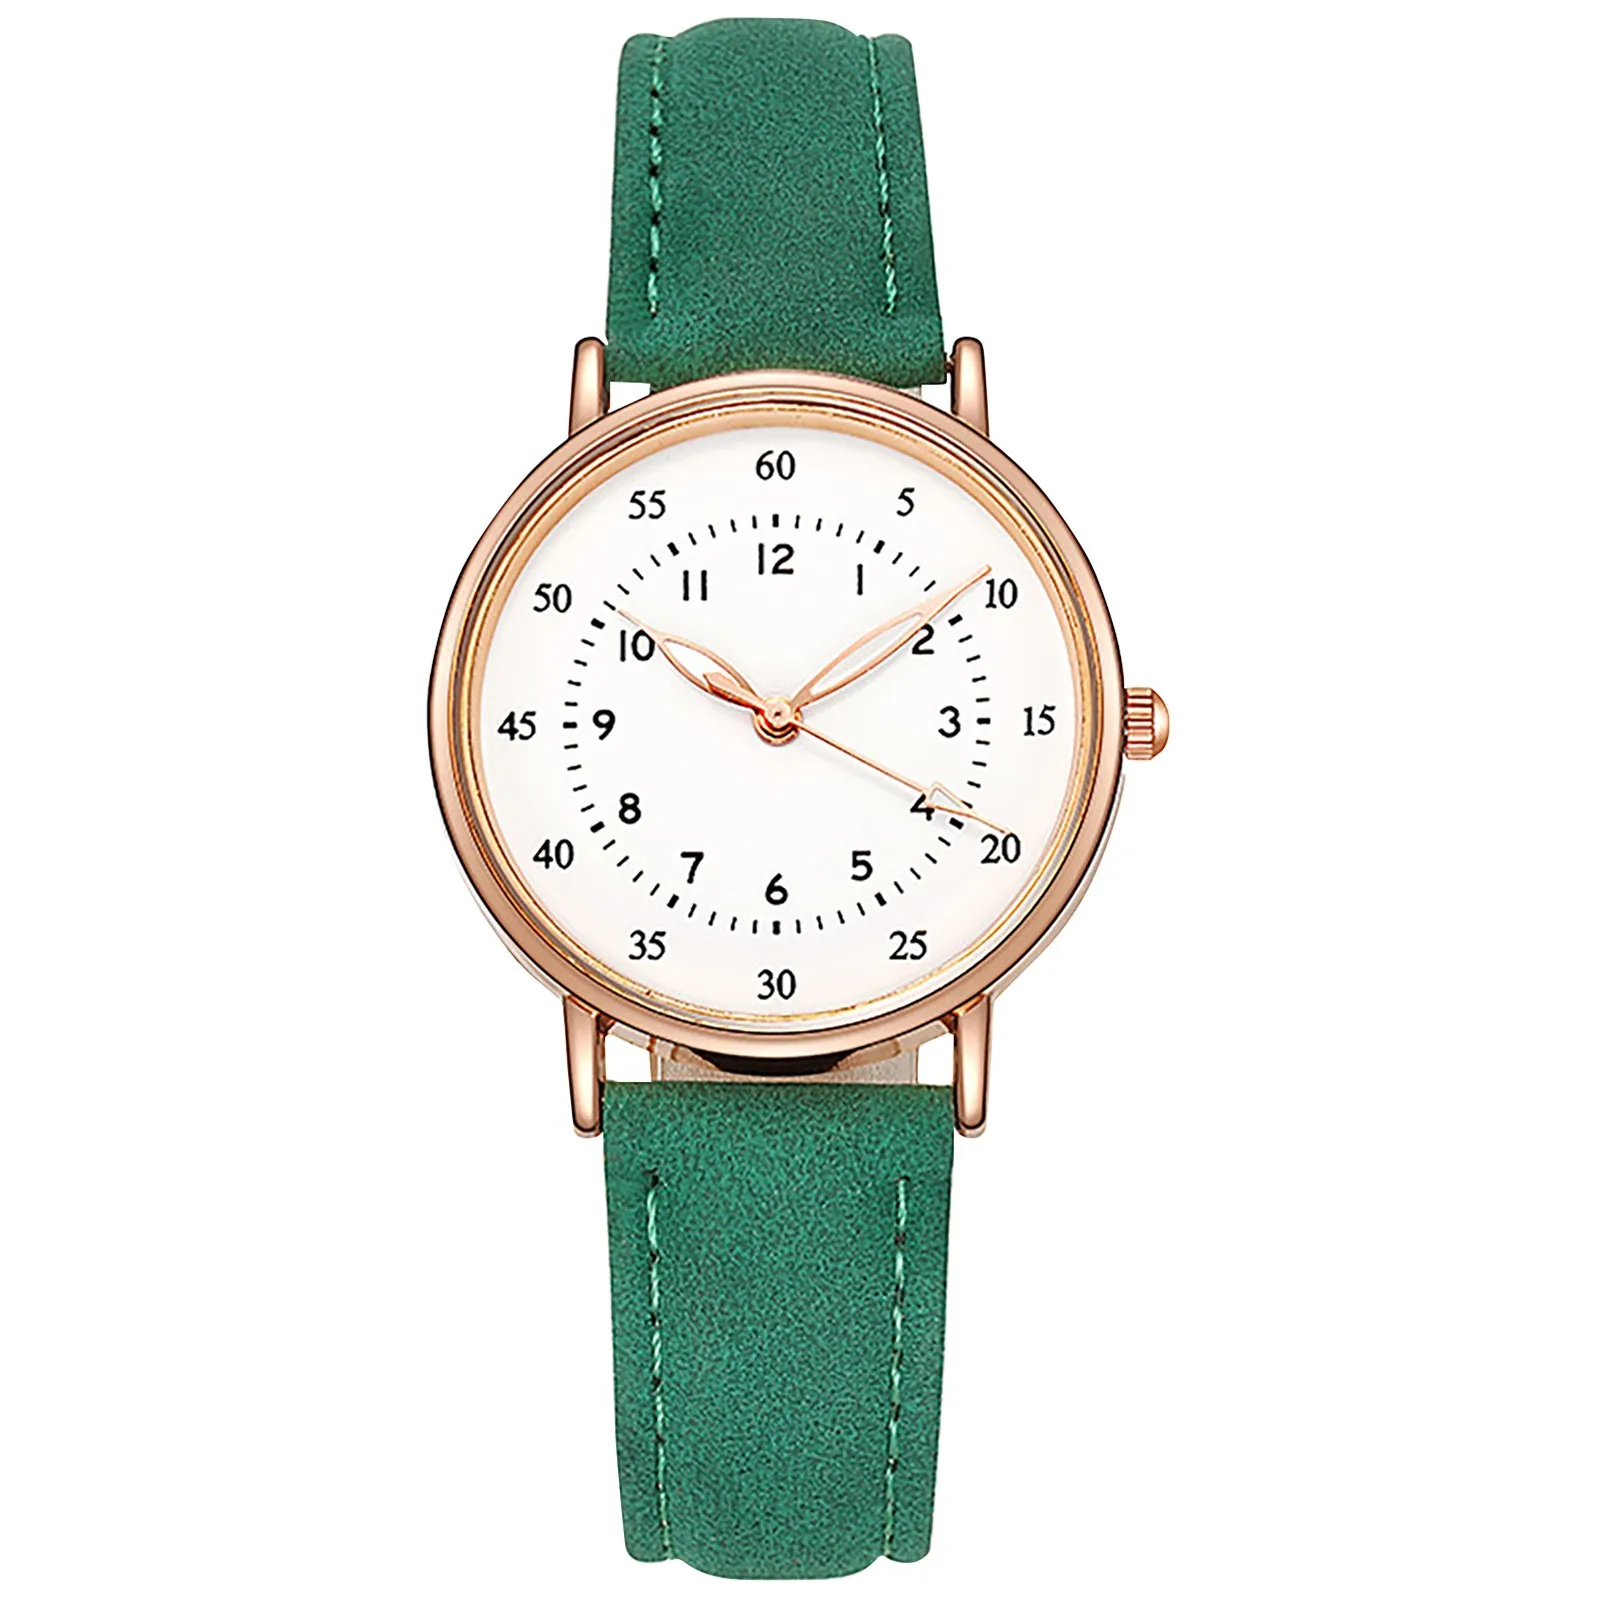 Women'S Watch Leather Wristband Women'S Watch Quartz Watch часы женские 2022 тренд Watches For Women Zegarek Damski RelóGio New